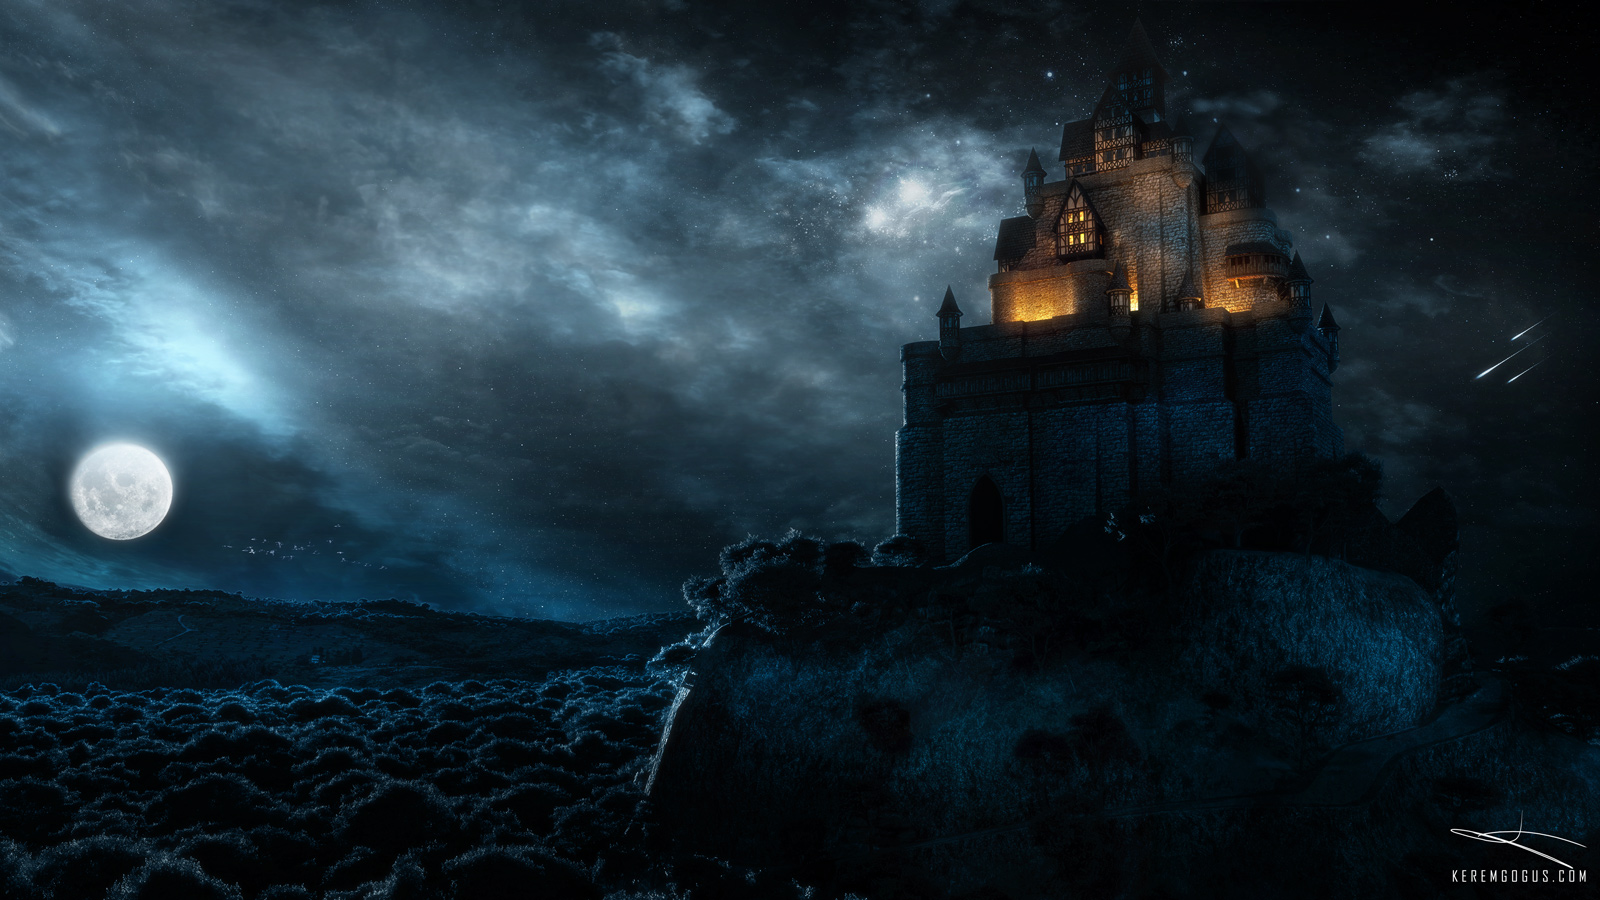 1600x900_4657_Another_Fairytale_3d_landscape_moon_forest_castle_night_fantasy_picture_image_digital_art